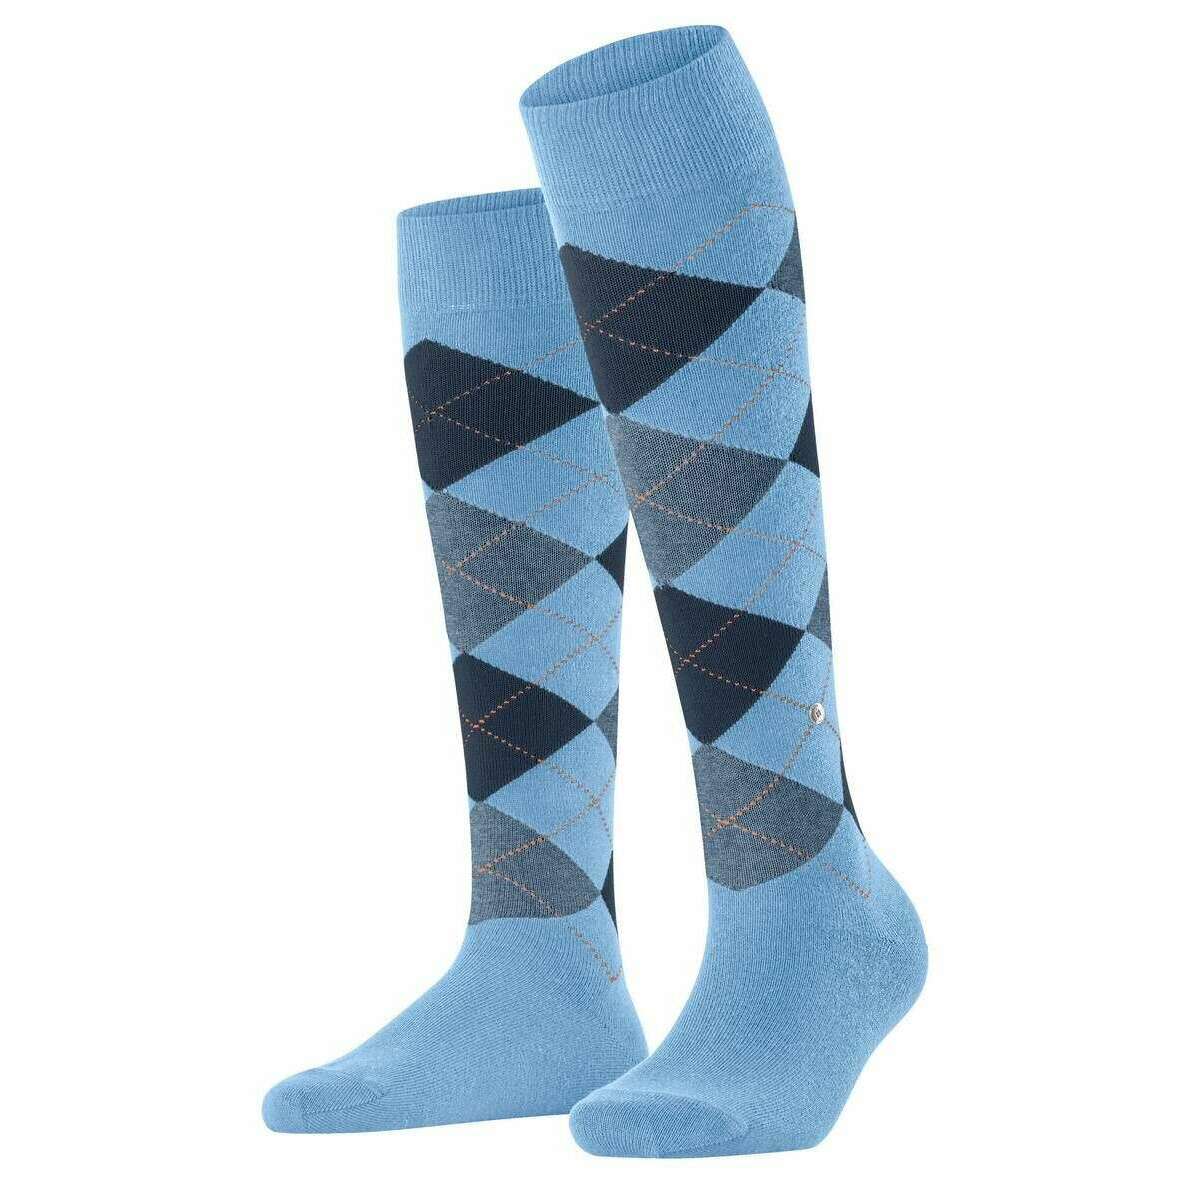 Burlington Queen Knee High Socks - Light Blue